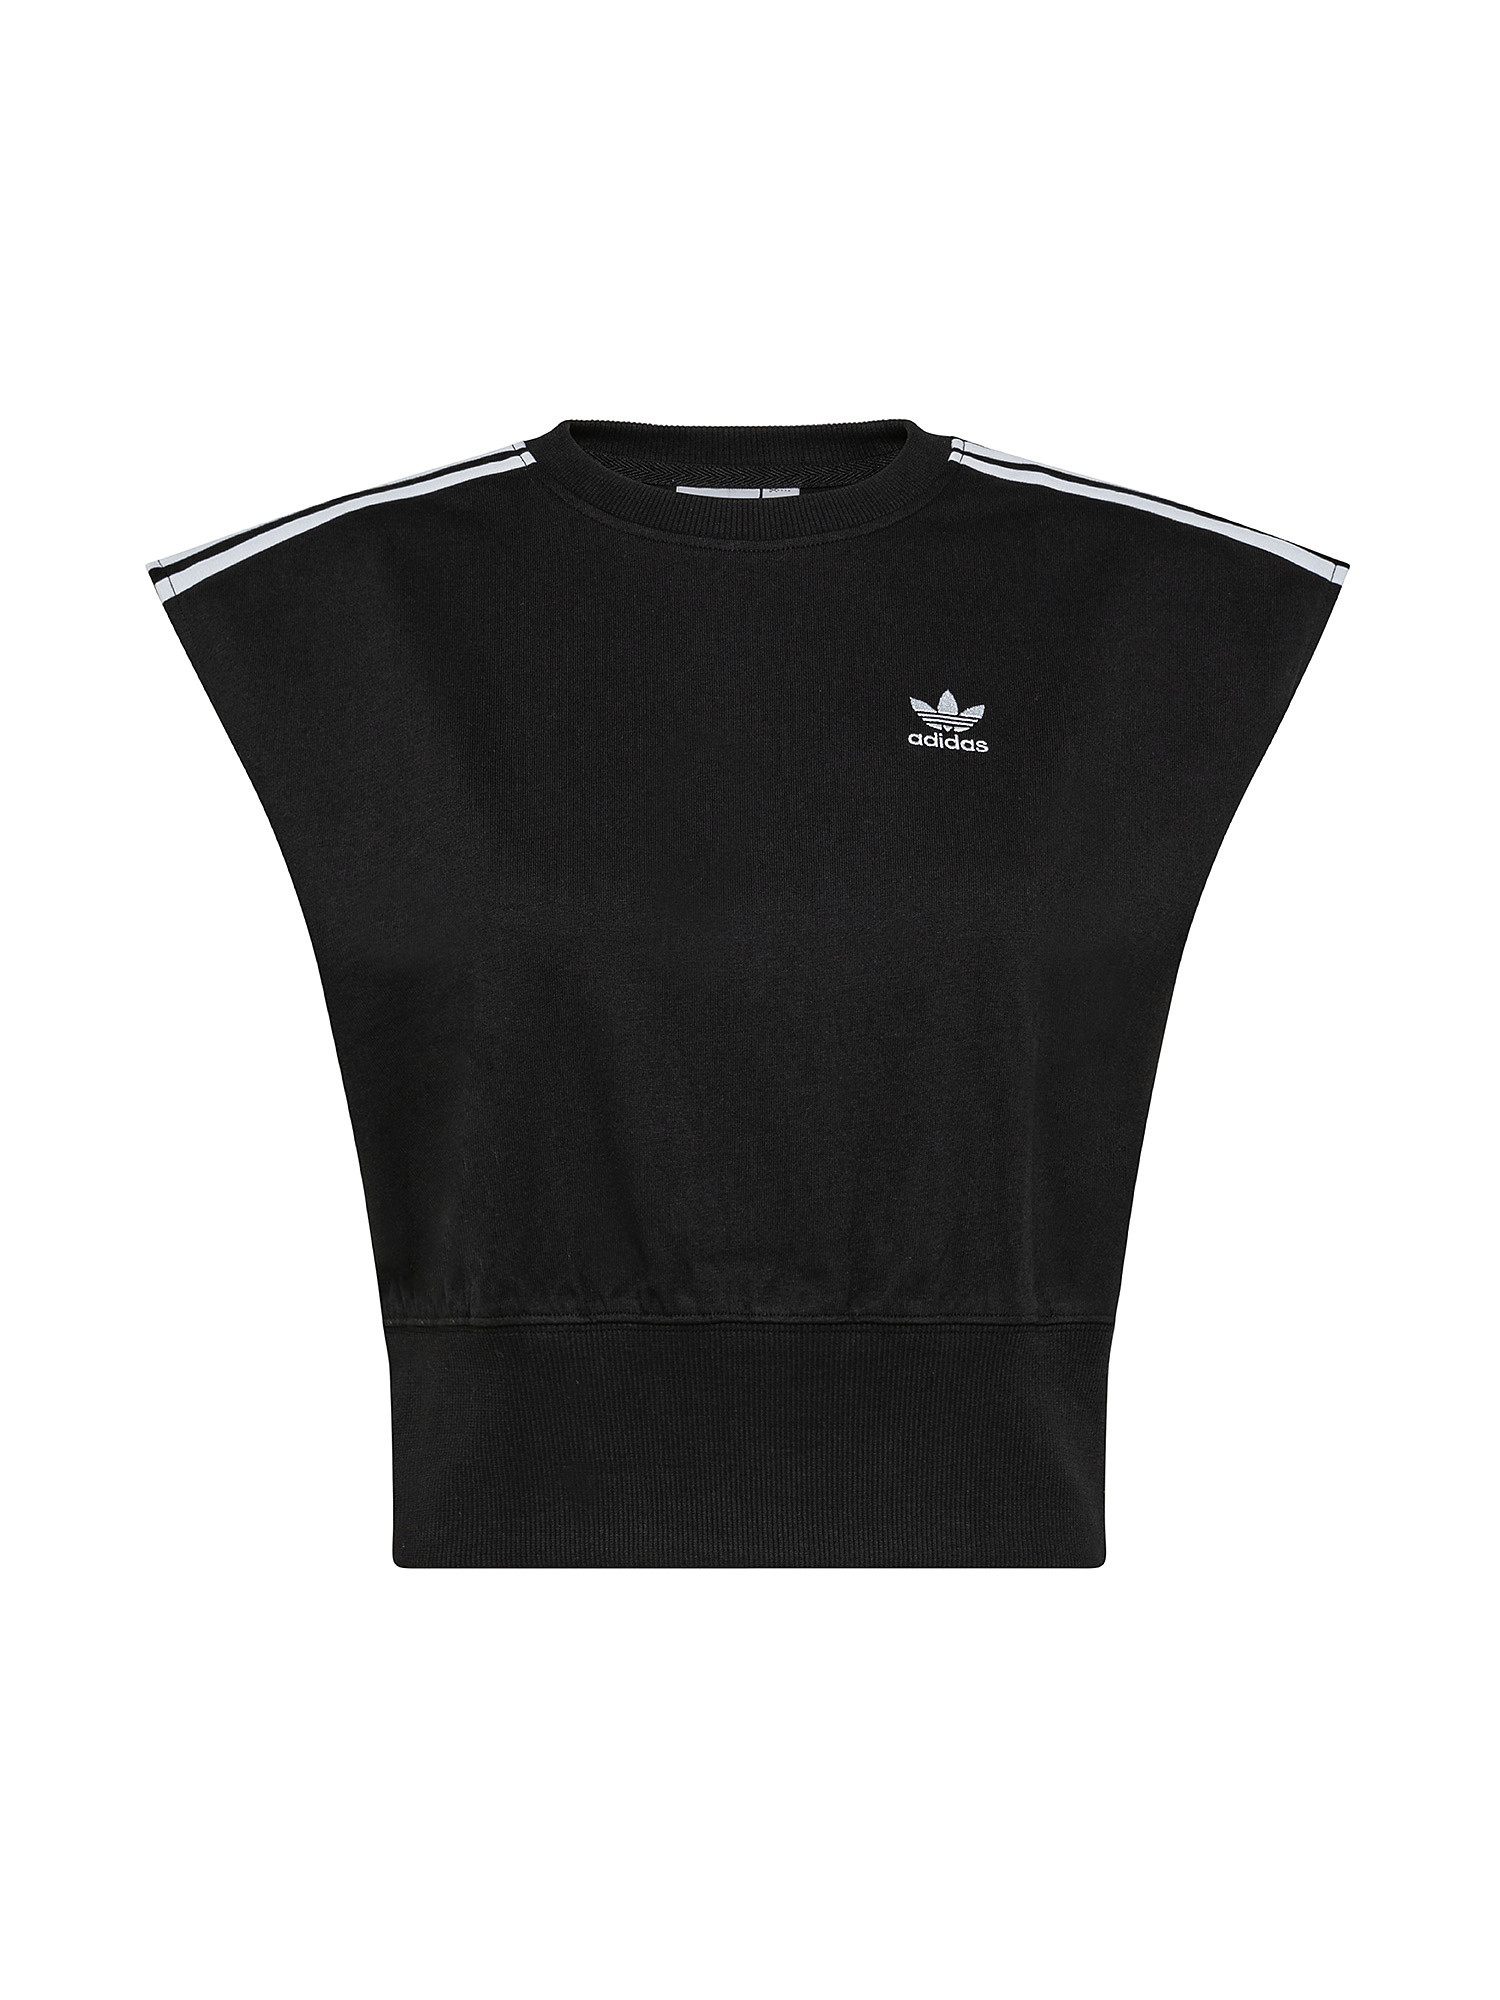 Adidas - Adicolor T-shirt with logo, Black, large image number 0